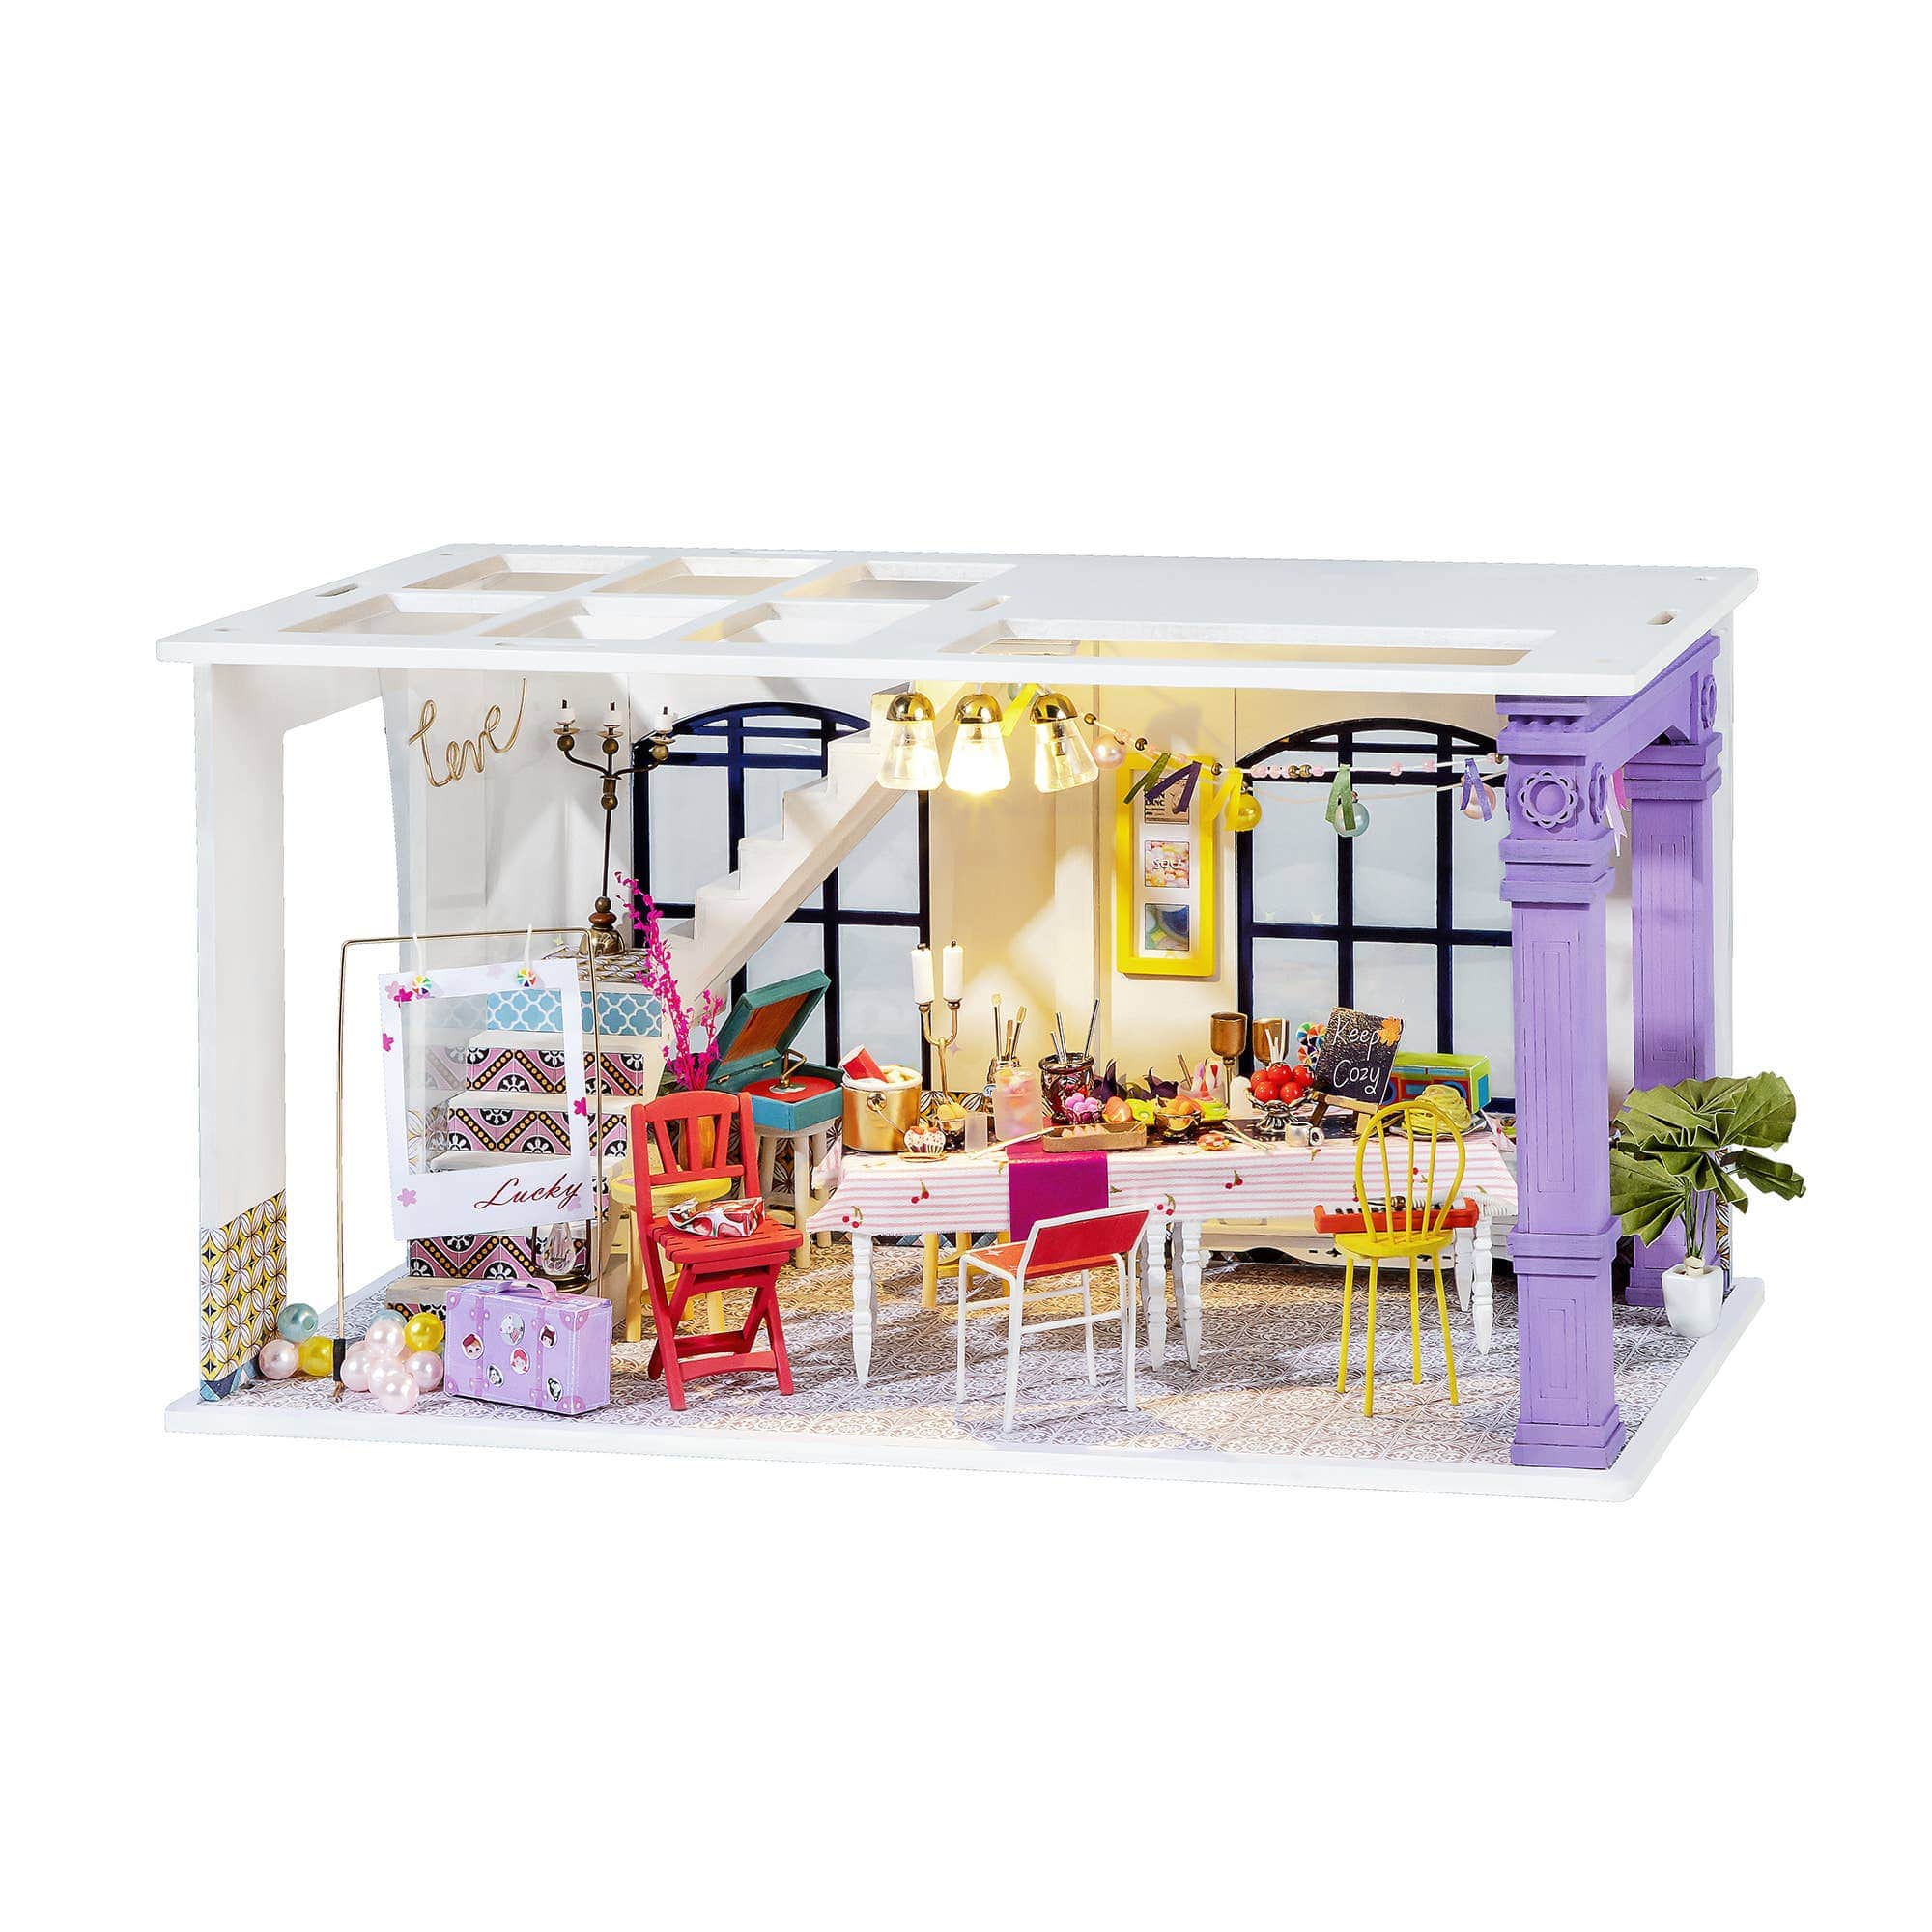 Hands Craft DGF03, Party Time DIY Miniature Dollhouse Kit Kawaii Gifts 850005994541